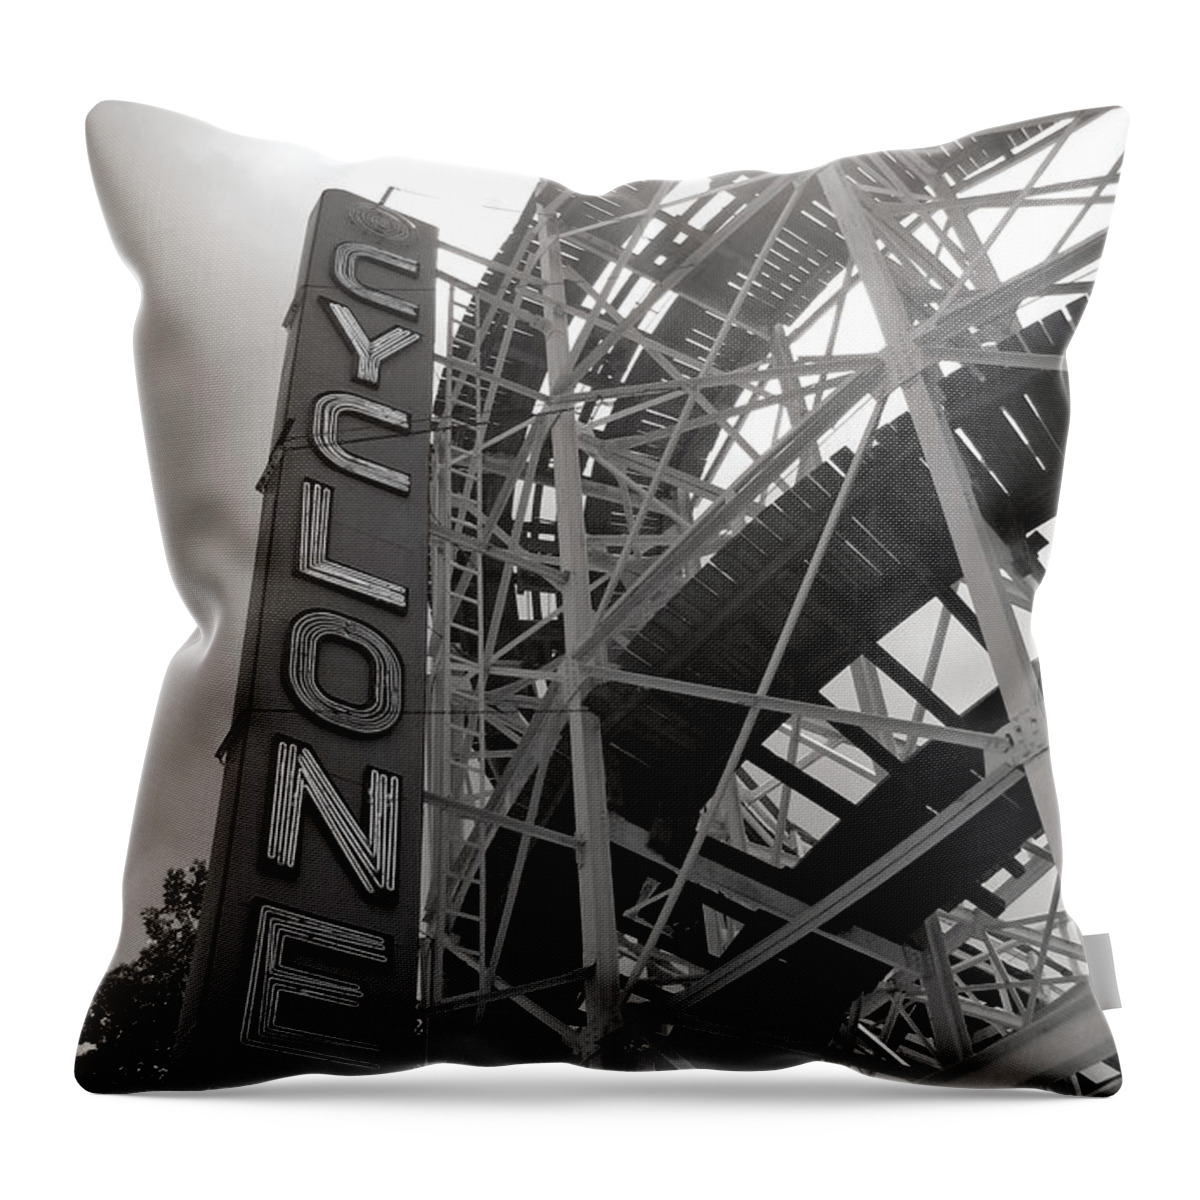 Cyclone Throw Pillow featuring the digital art Cyclone Rollercoaster - Coney Island by Jim Zahniser